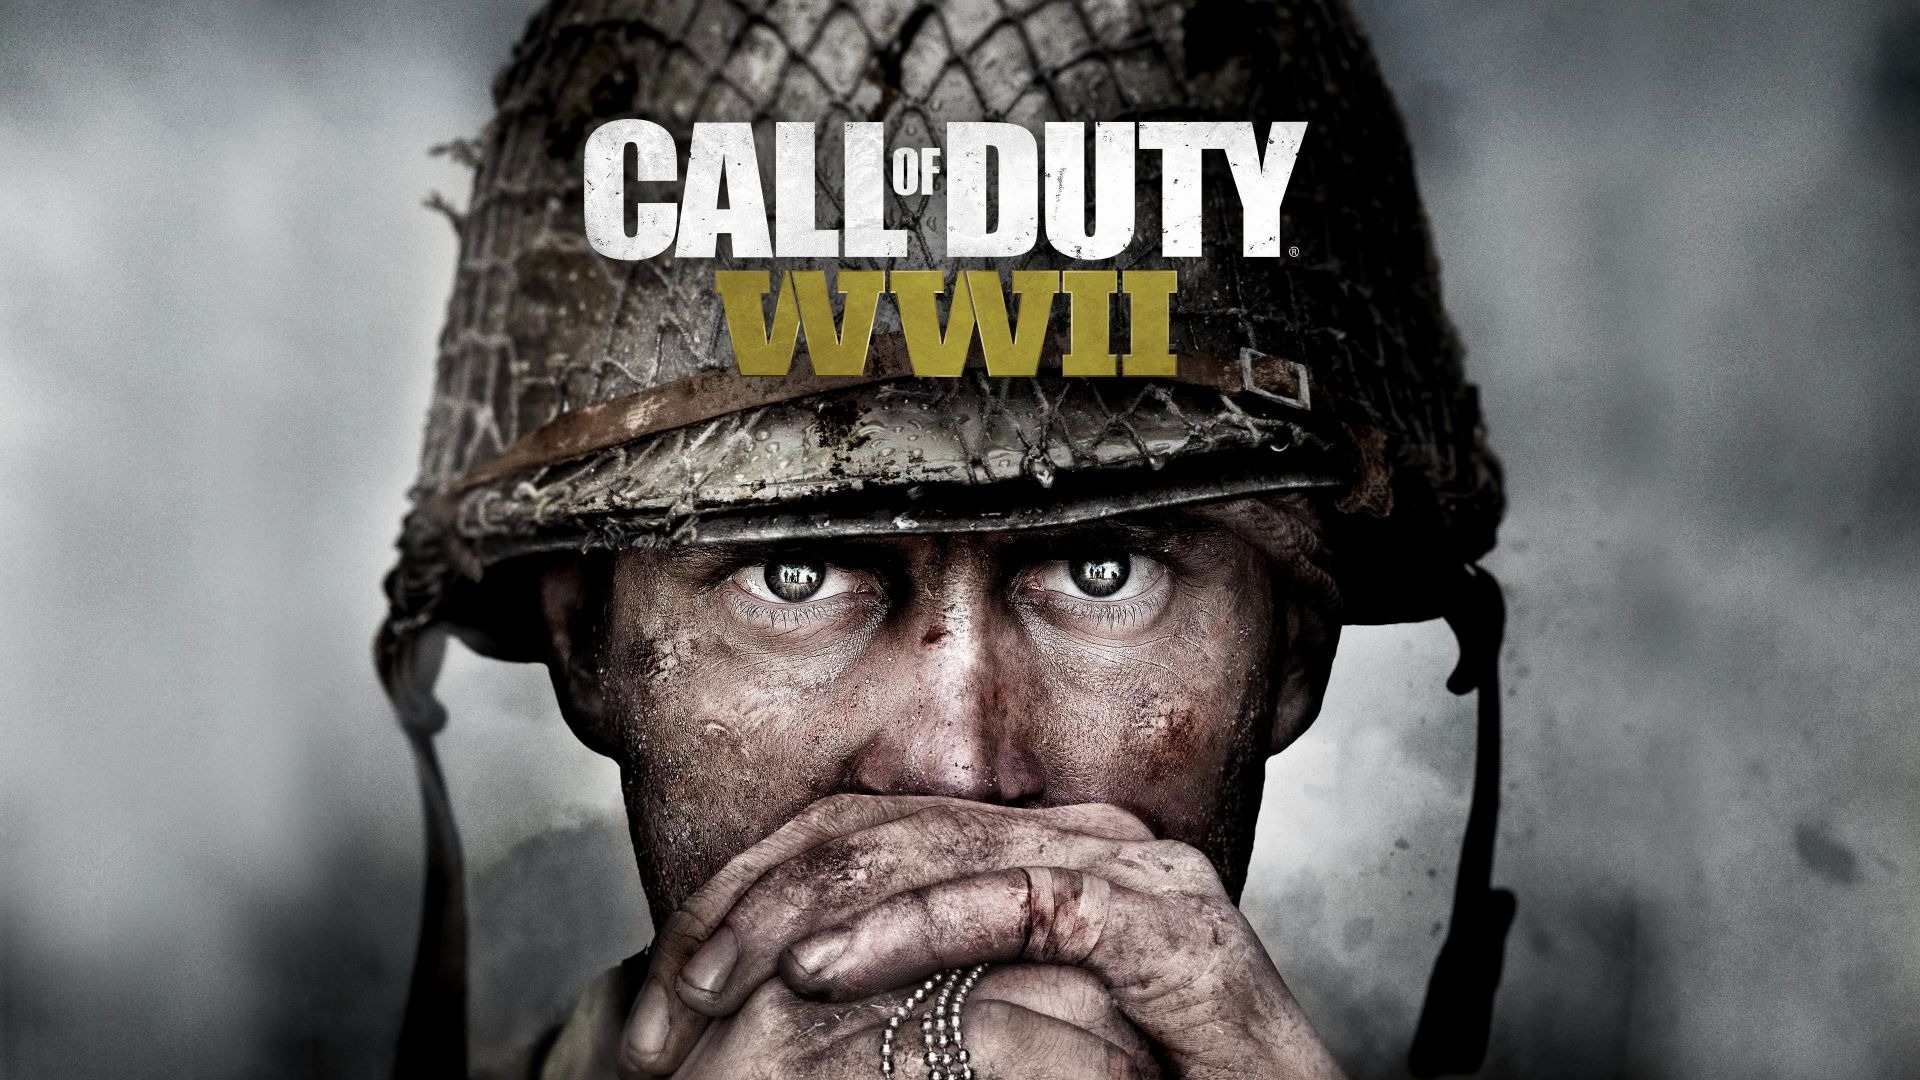 Call of Duty WWII (2 часть)